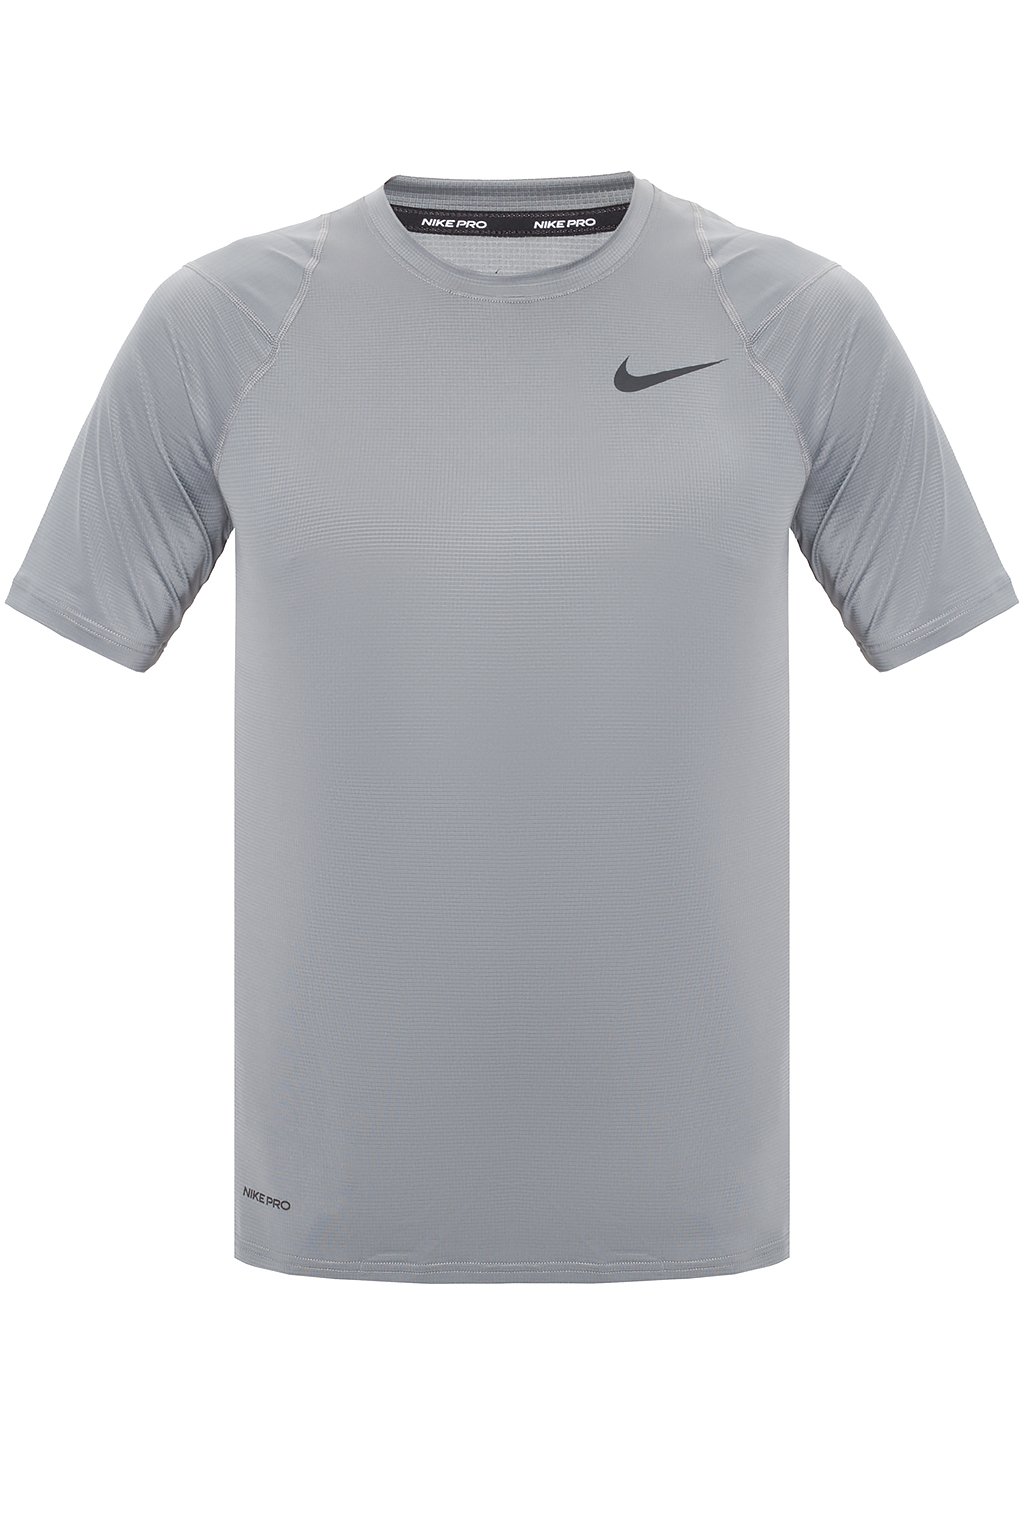 Performance T-shirt with logo Nike - Vitkac Singapore